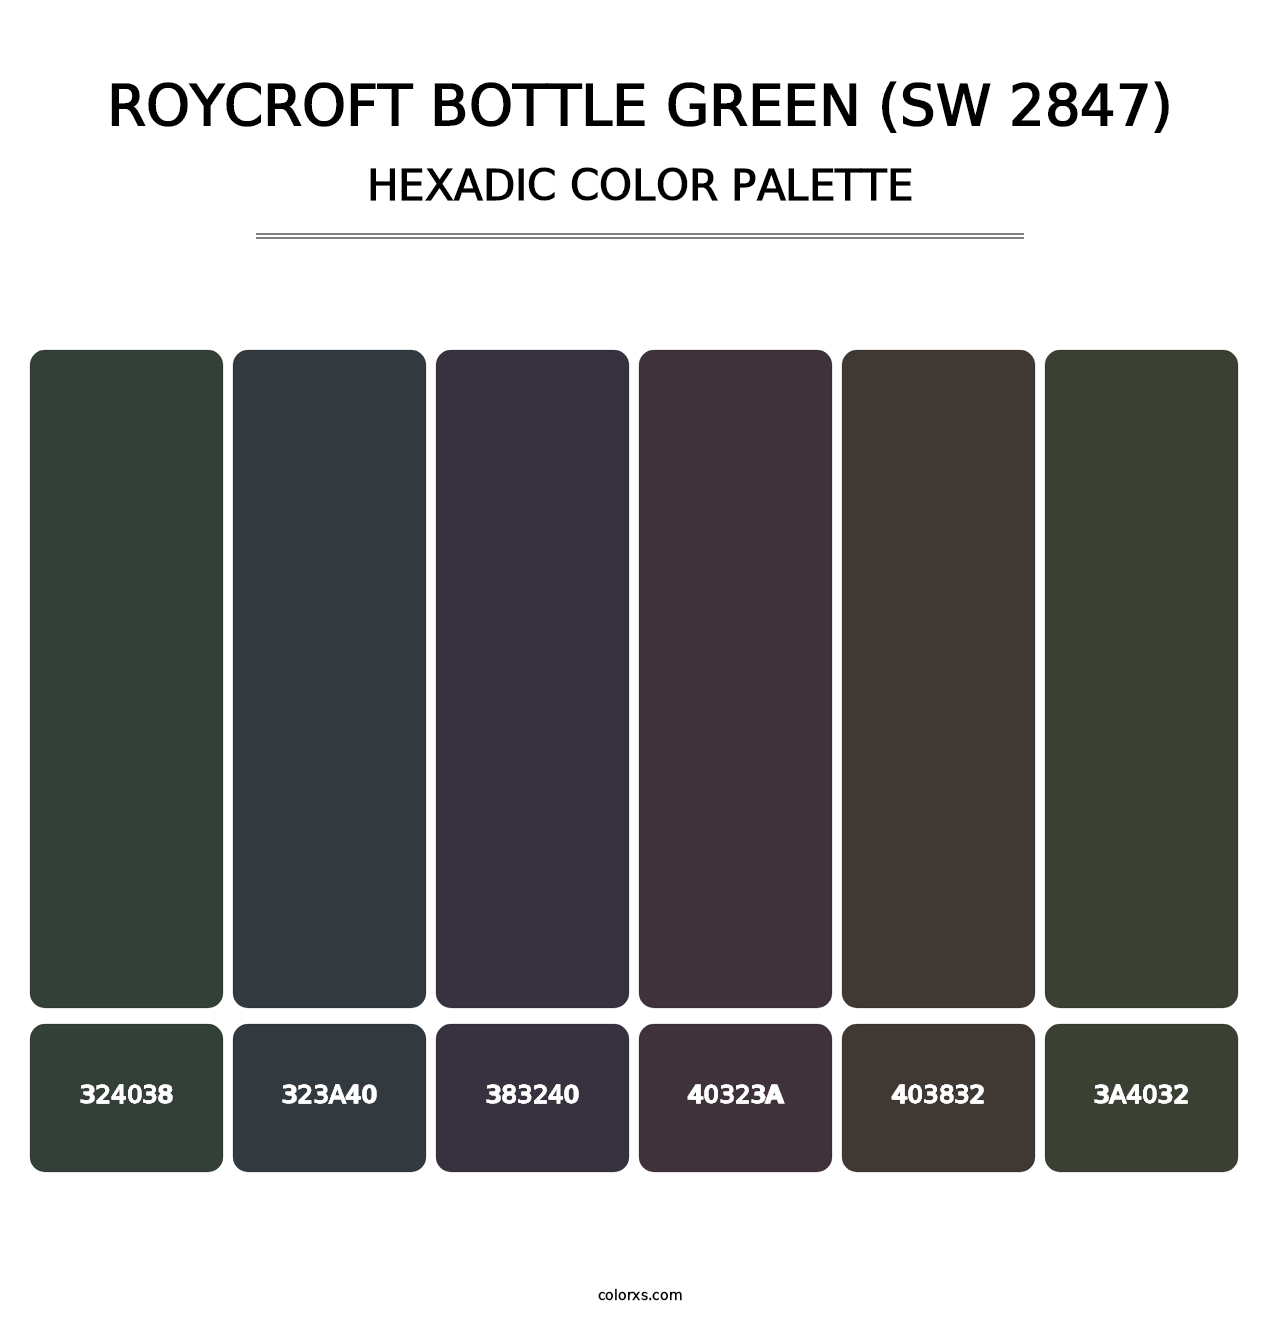 Roycroft Bottle Green (SW 2847) - Hexadic Color Palette